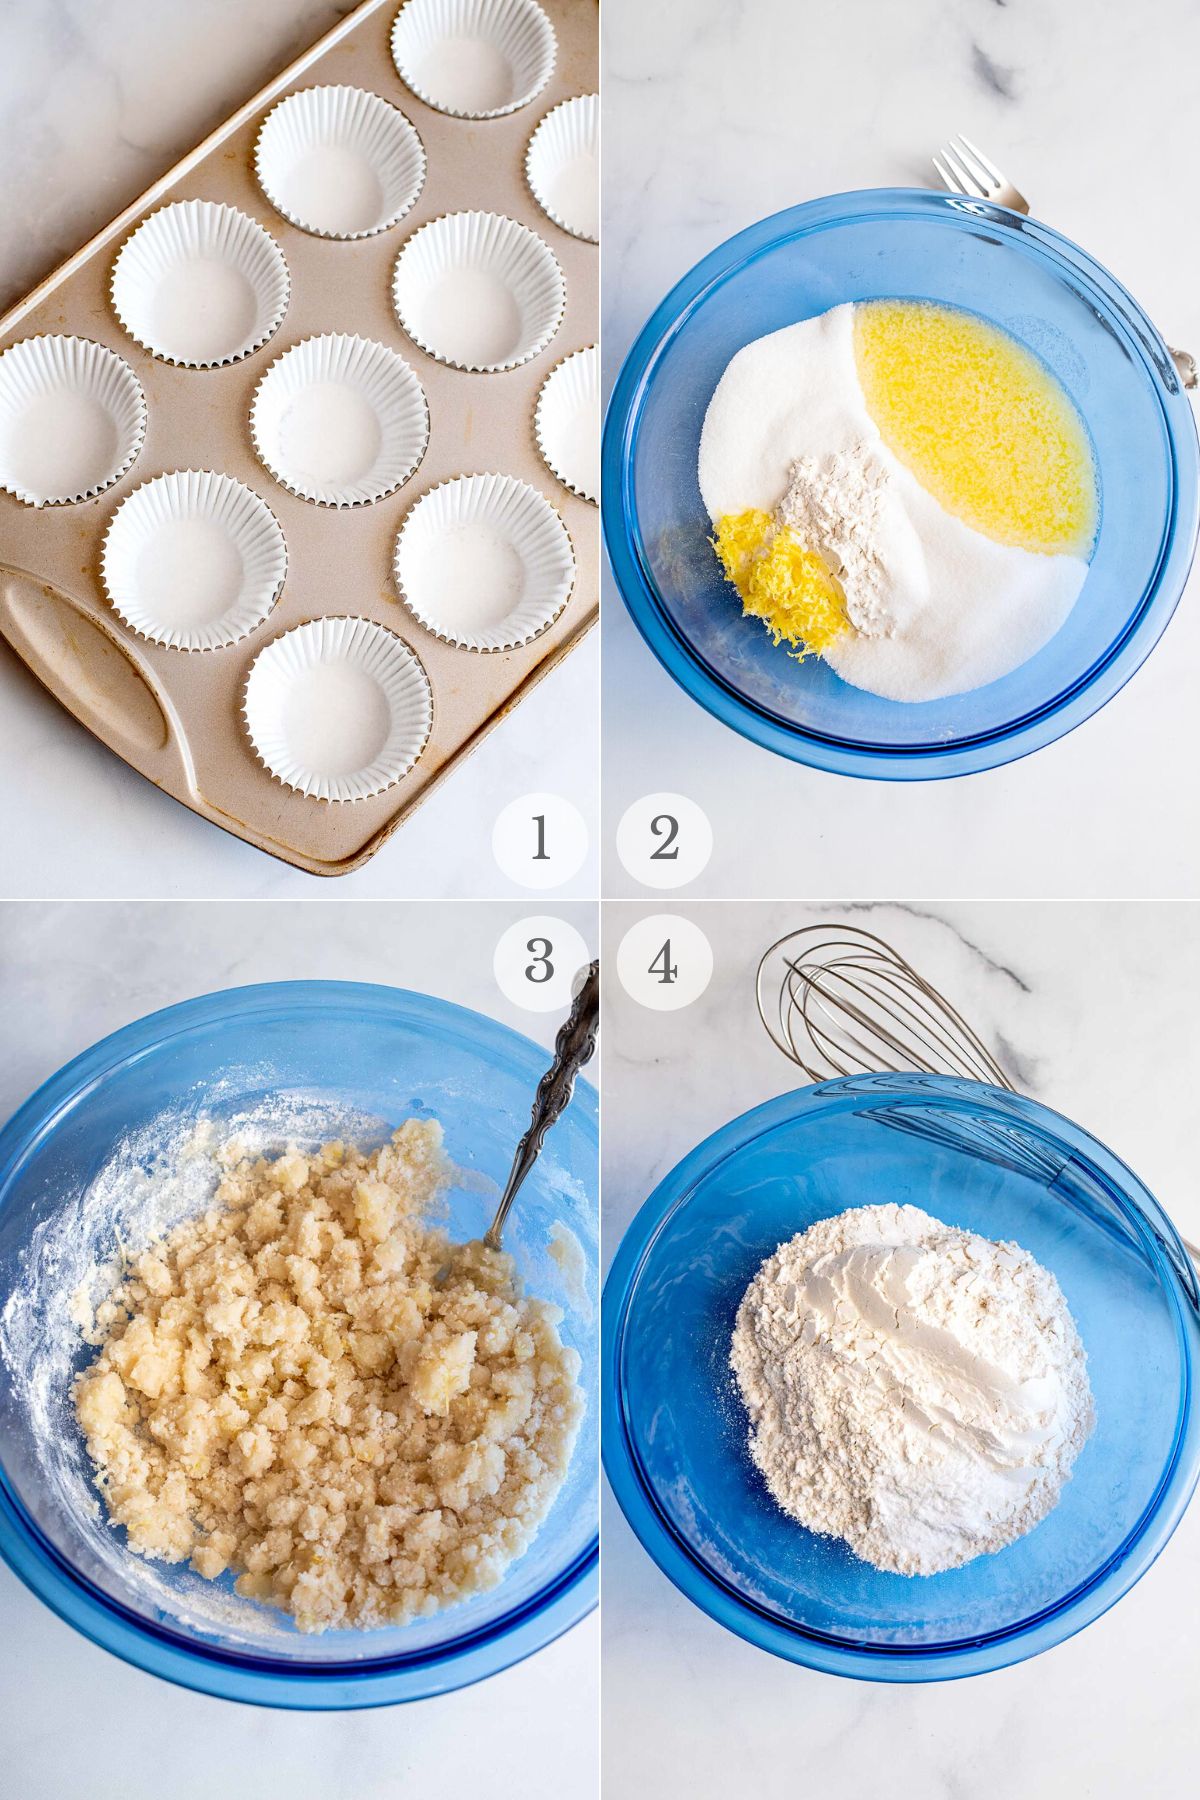 lemon muffins recipe steps 1-4.